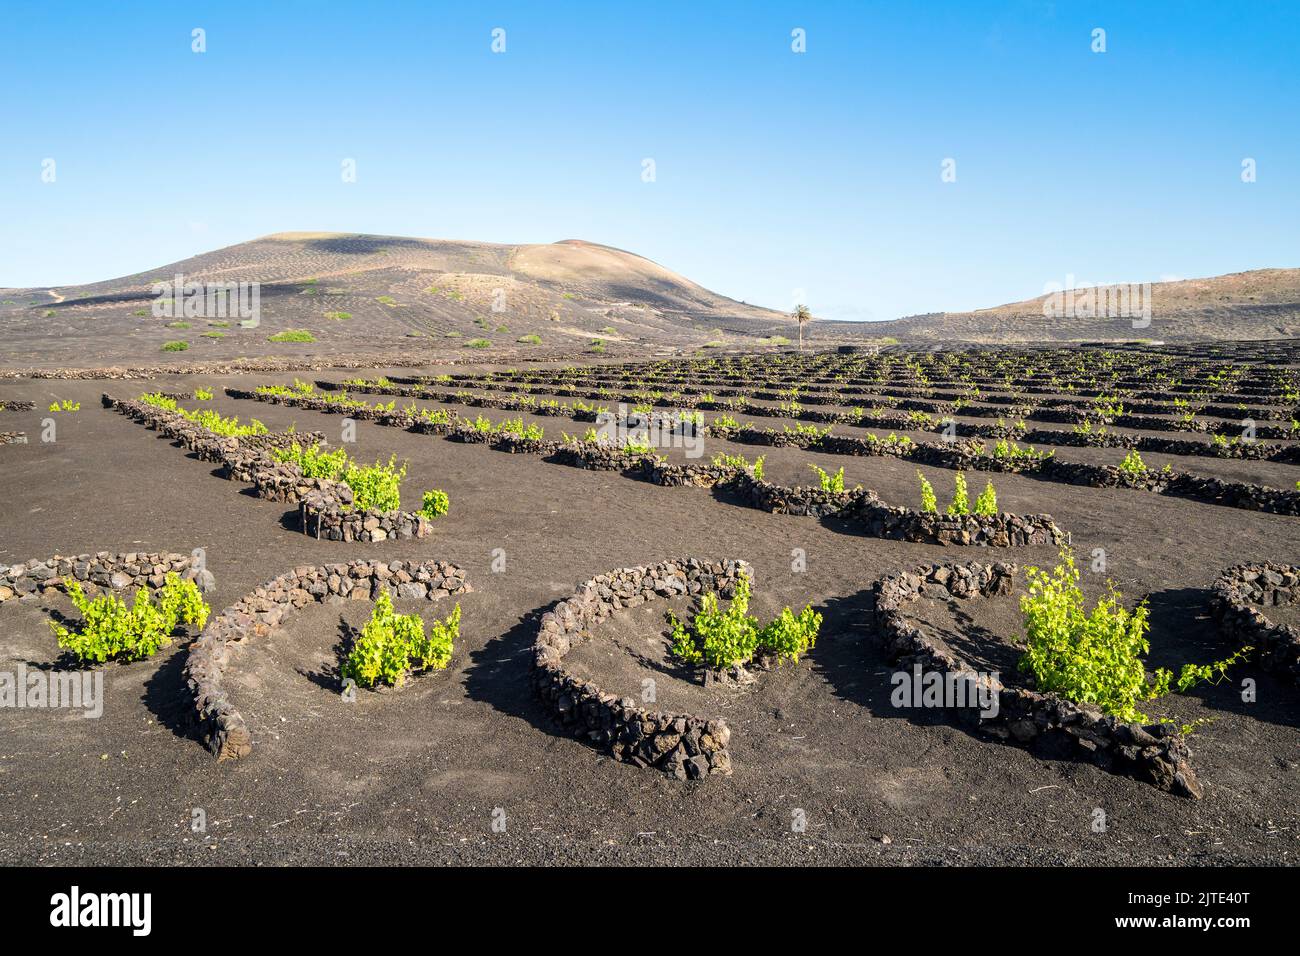 Grapevine on black volcanic soil in vineyards of La Geria, Lanzarote, Canary Islands, Spain Stock Photo